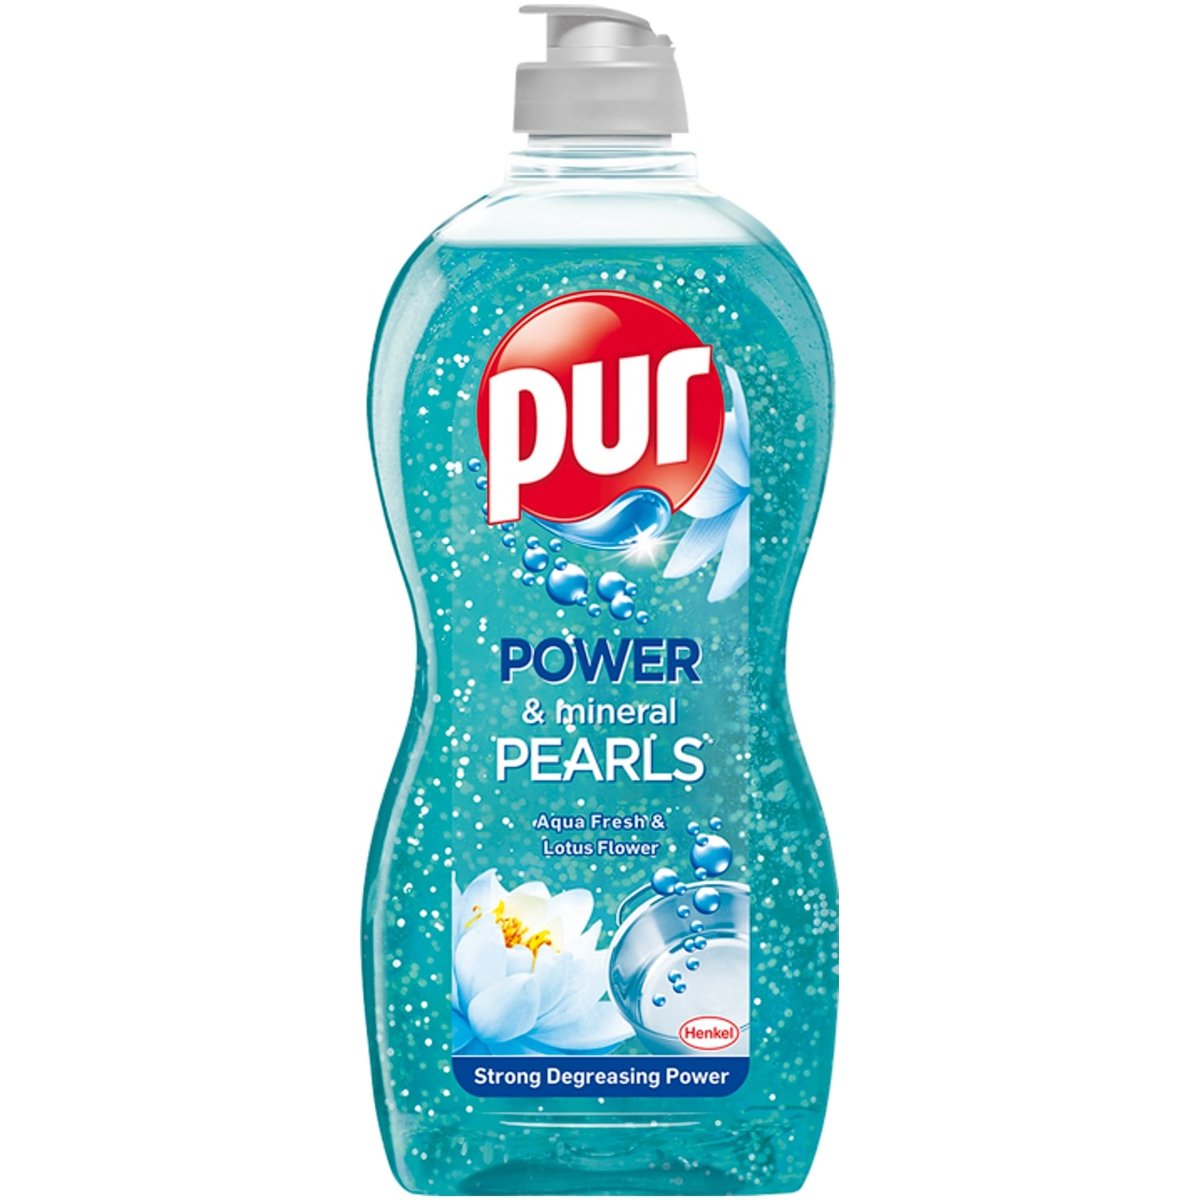 Pur Power & Mineral Pearls Aqua Fresh & Lotus Flower prostředek na ruční mytí nádobí